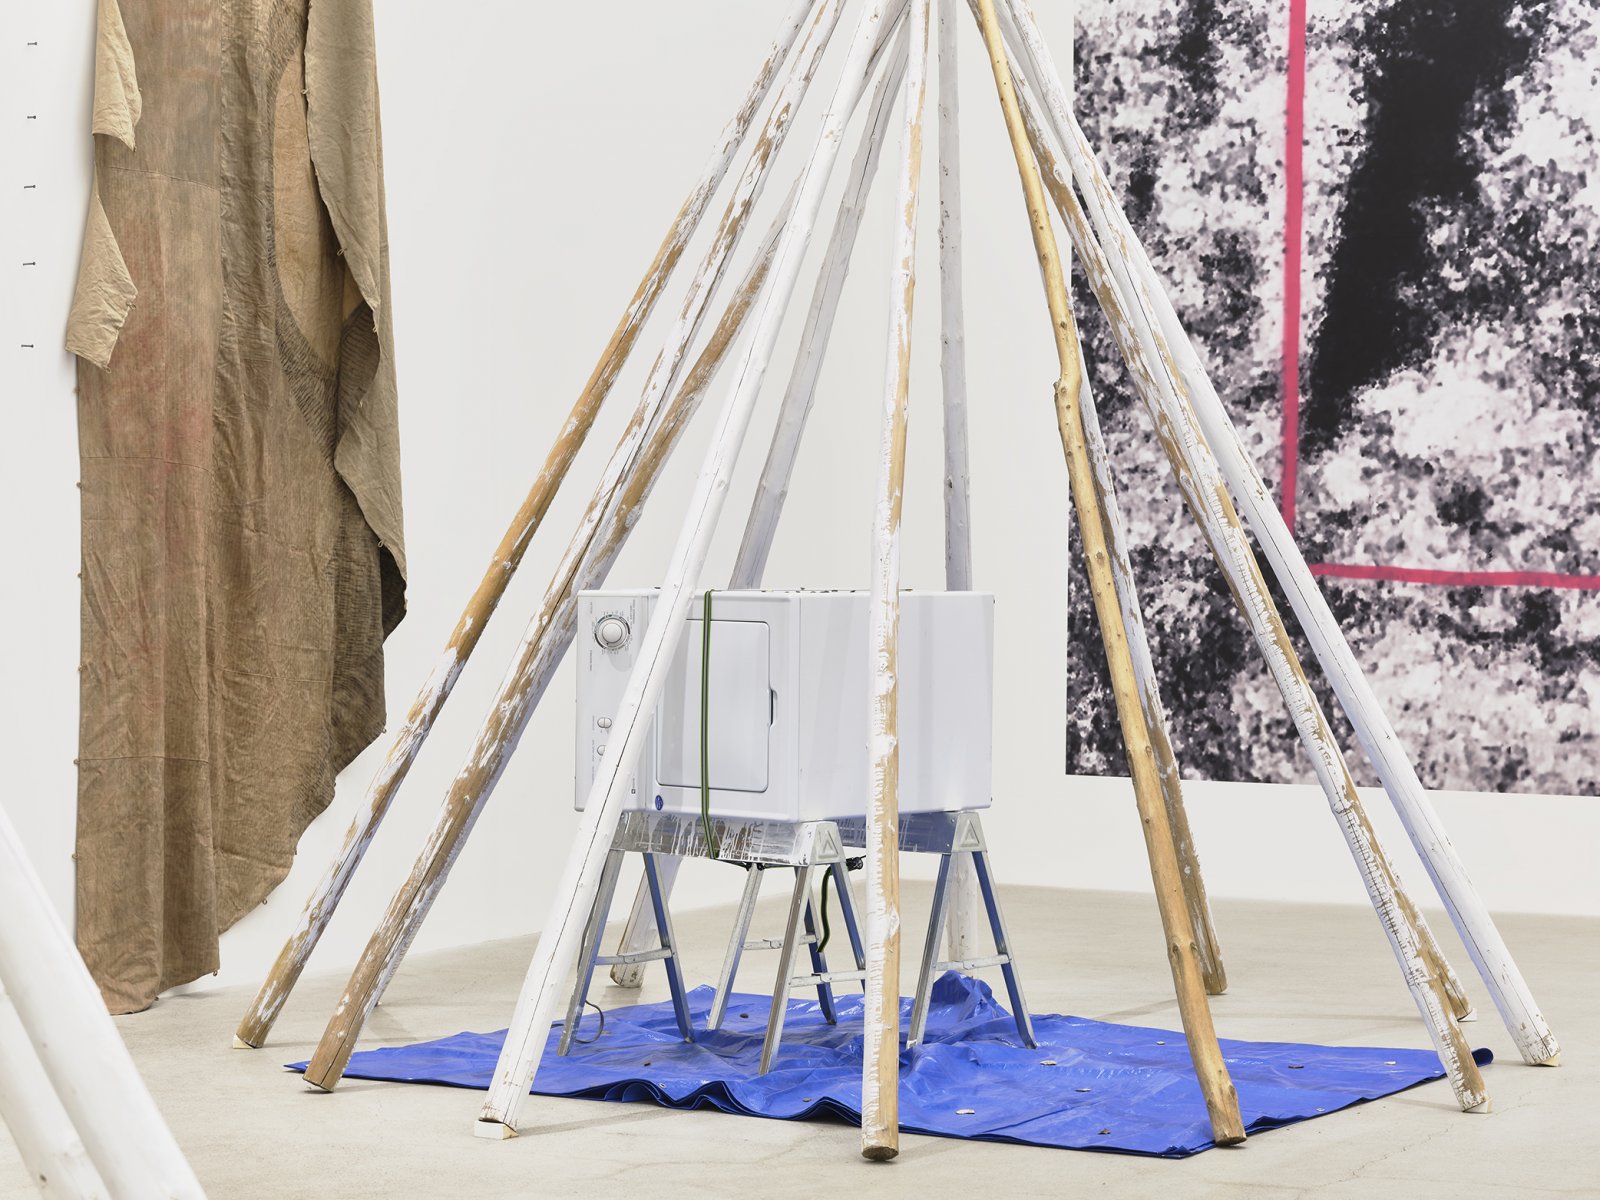 Duane Linklater, anteclovis (detail), 2020, teepee poles, paint, nylon rope, tarpaulin, steel sawhorses, washing machine, tie-down strap, arrowheads, 230 x 158 x 158 in. (584 x 401 x 401 cm)